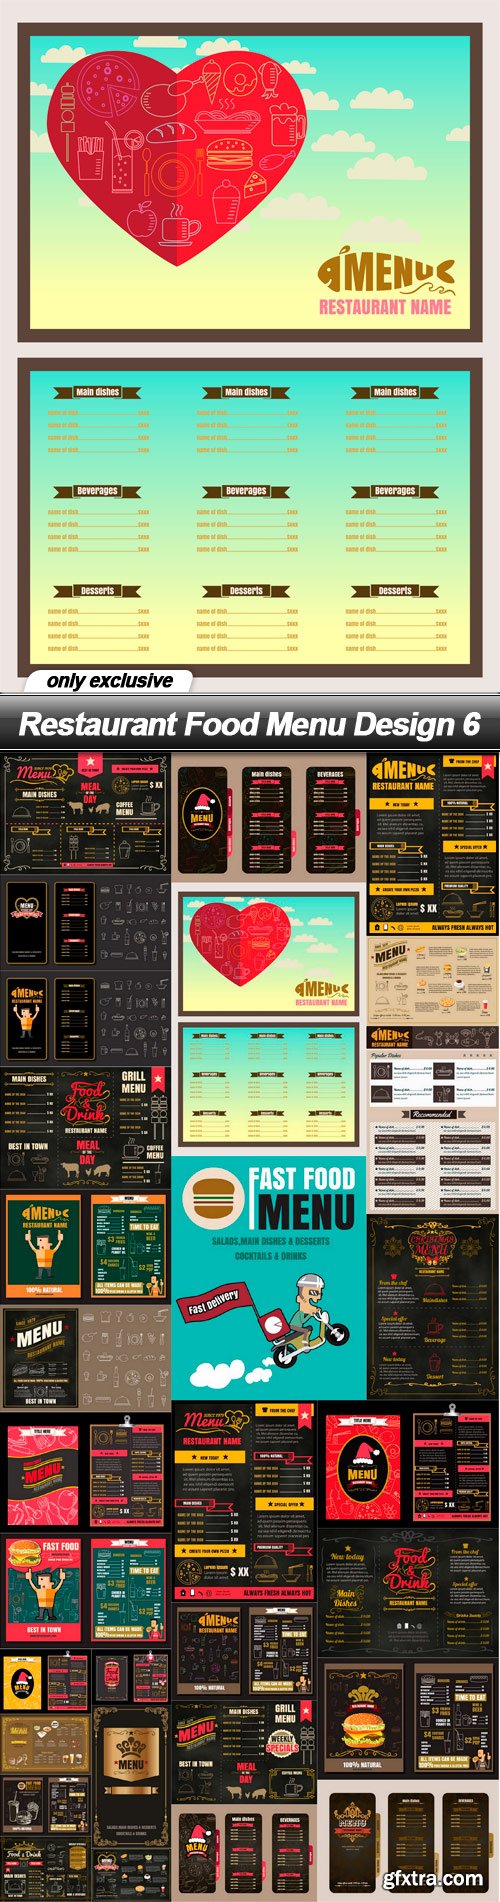 Restaurant Food Menu Design 6 - 30 EPS